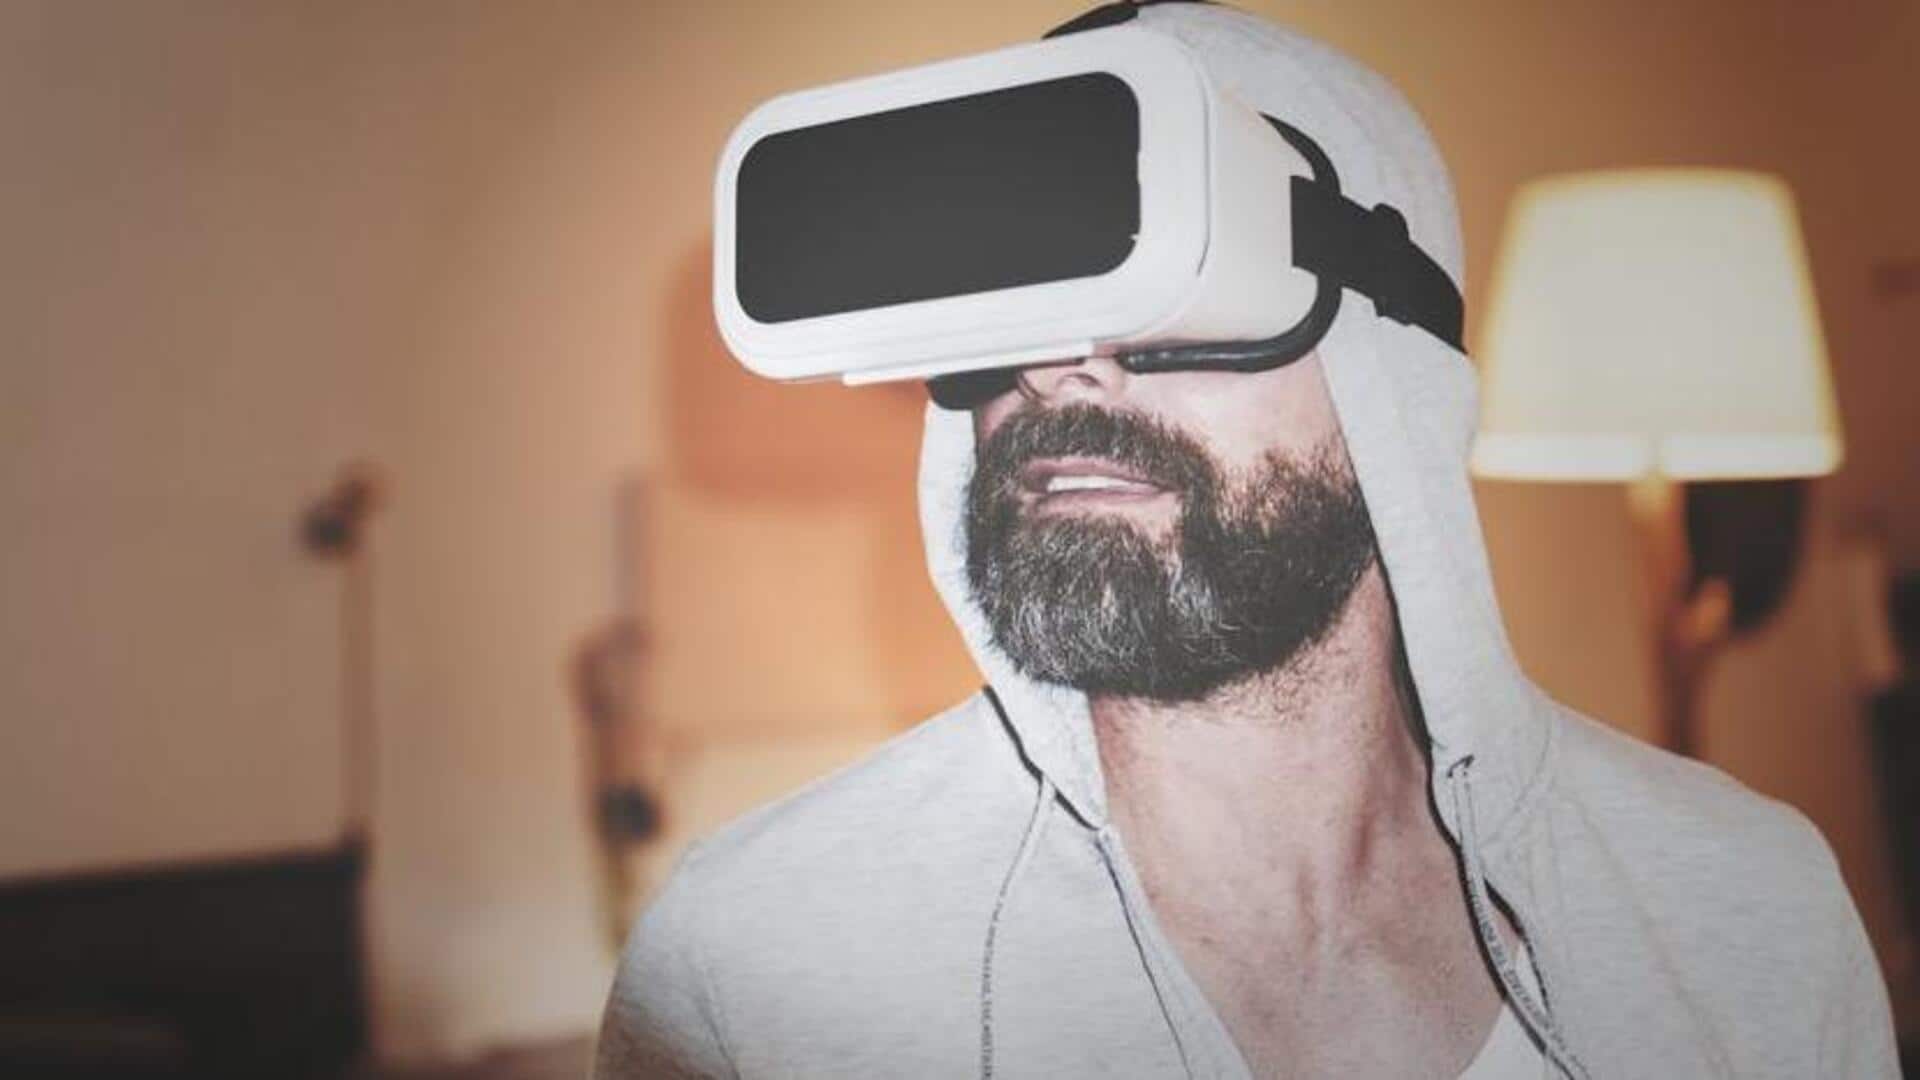 Hollywood films that showcase virtual reality